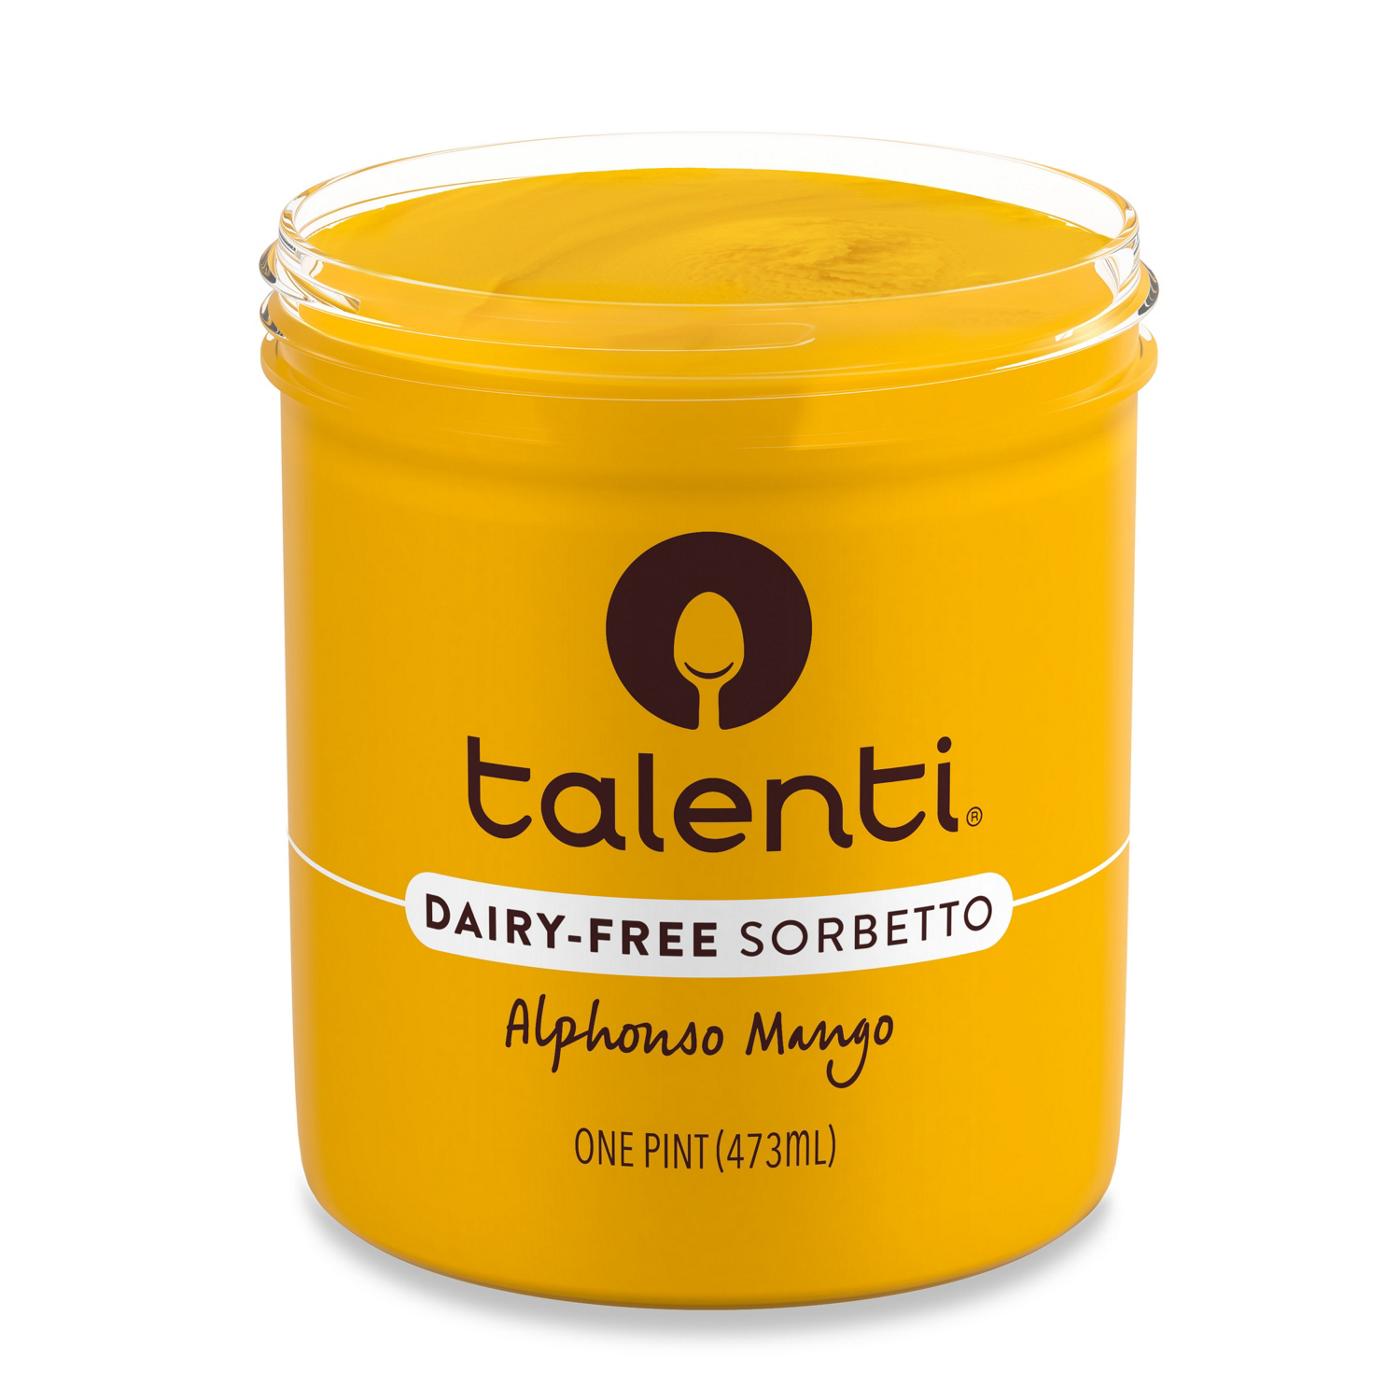 Talenti Alphonso Mango Dairy-Free Sorbetto; image 4 of 8